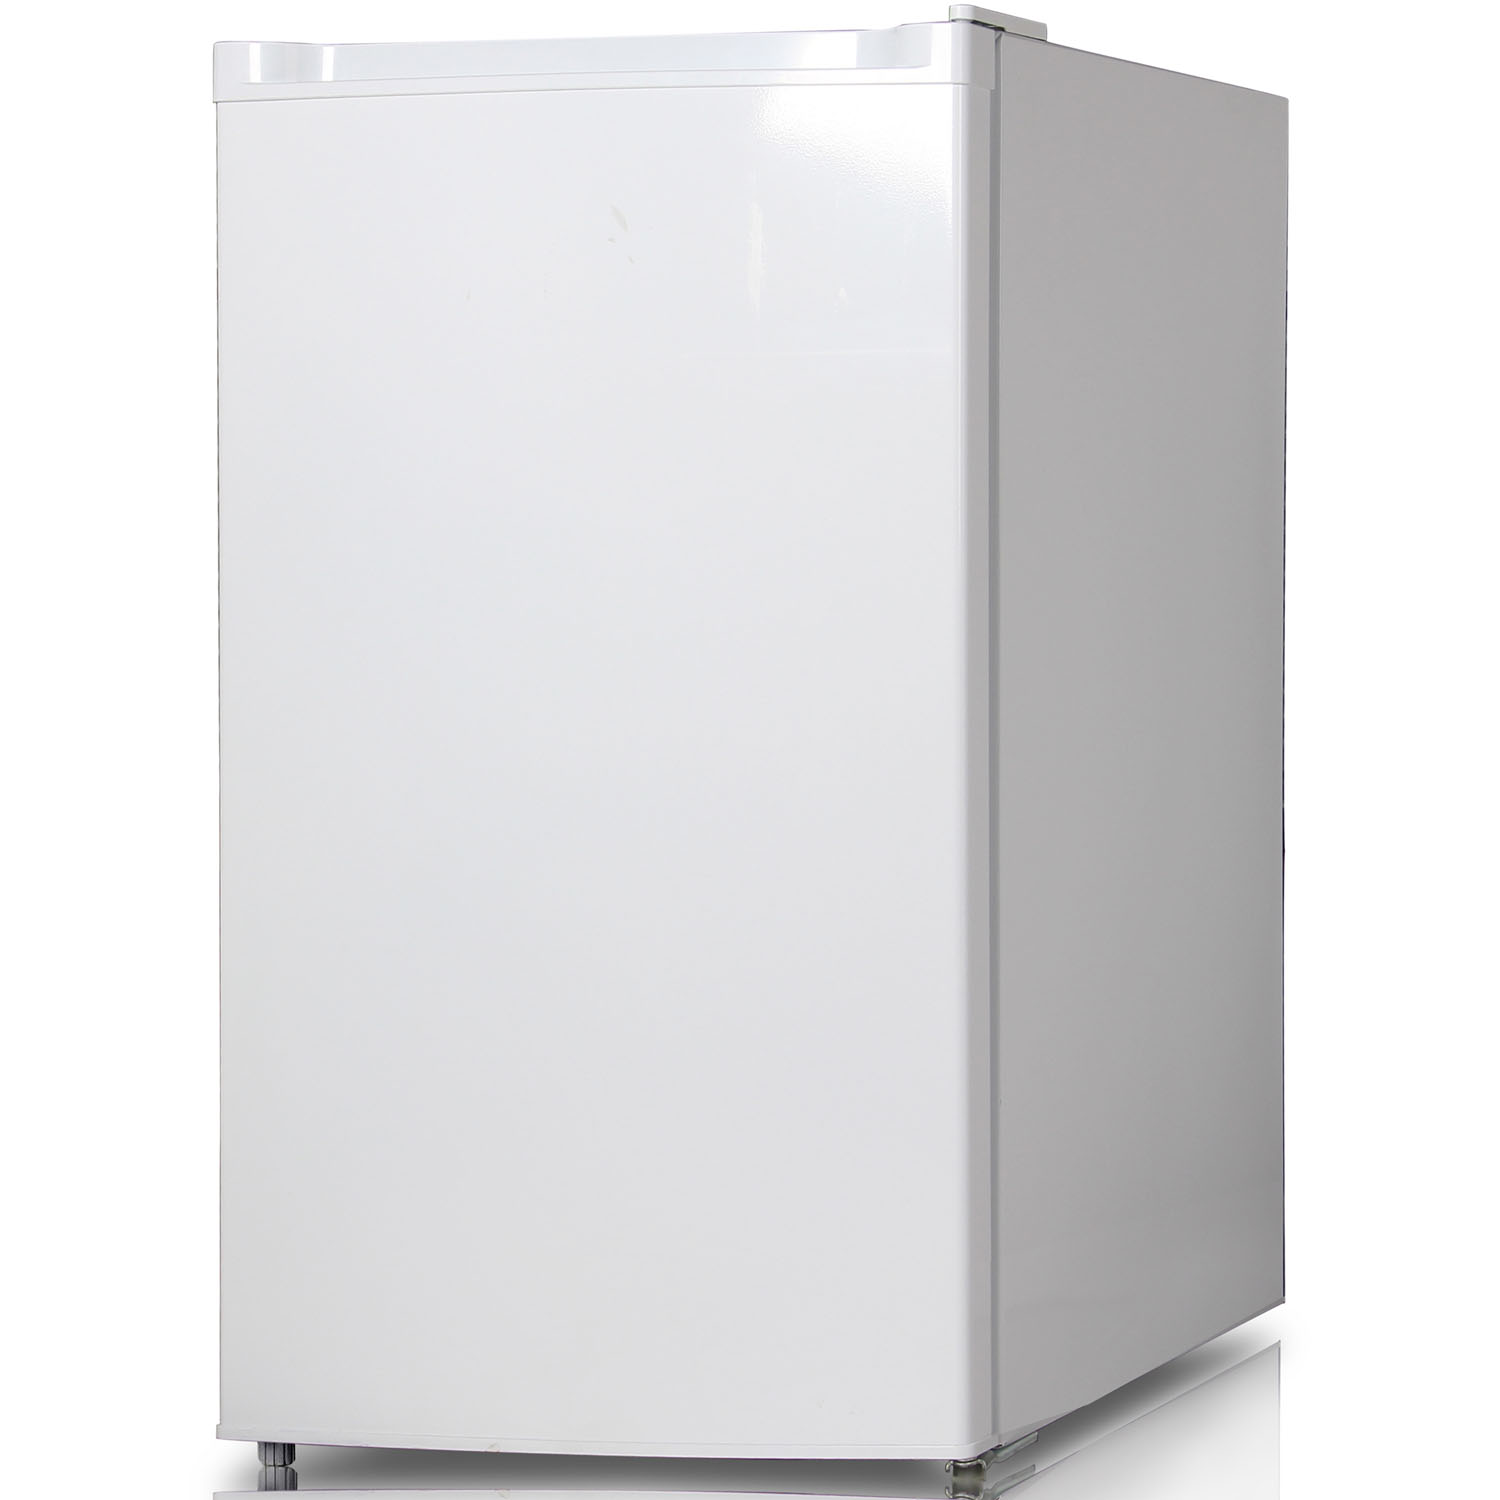 Keystone KSTRC43BW 4.4 Cu. Ft. Compact Refrigerator with Freezer Compartment - White